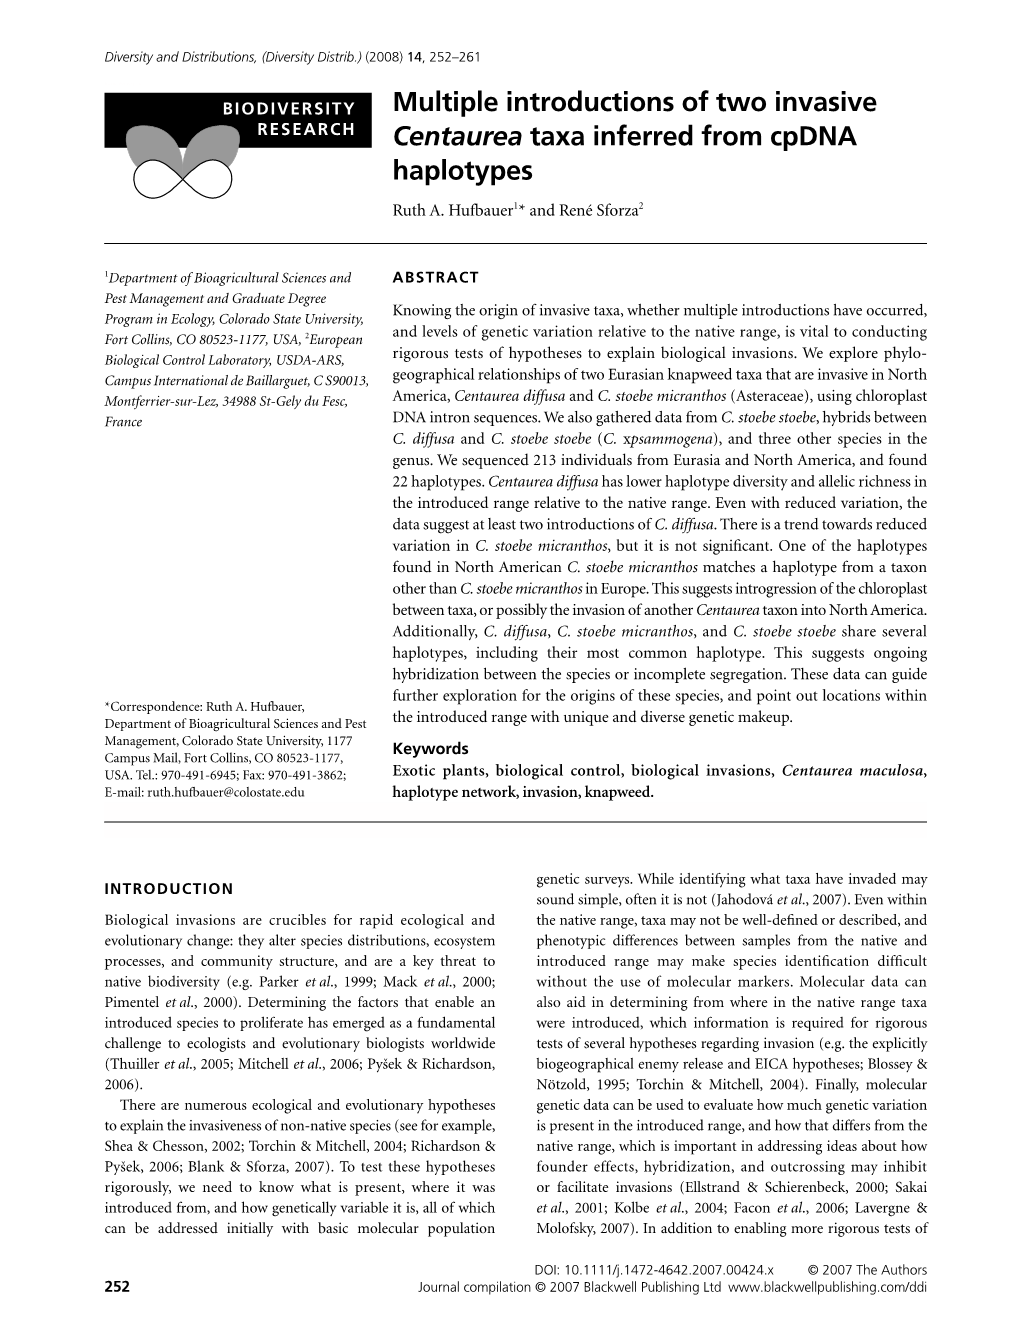 Multiple Introductions of Two Invasive Centaurea Taxa Inferred